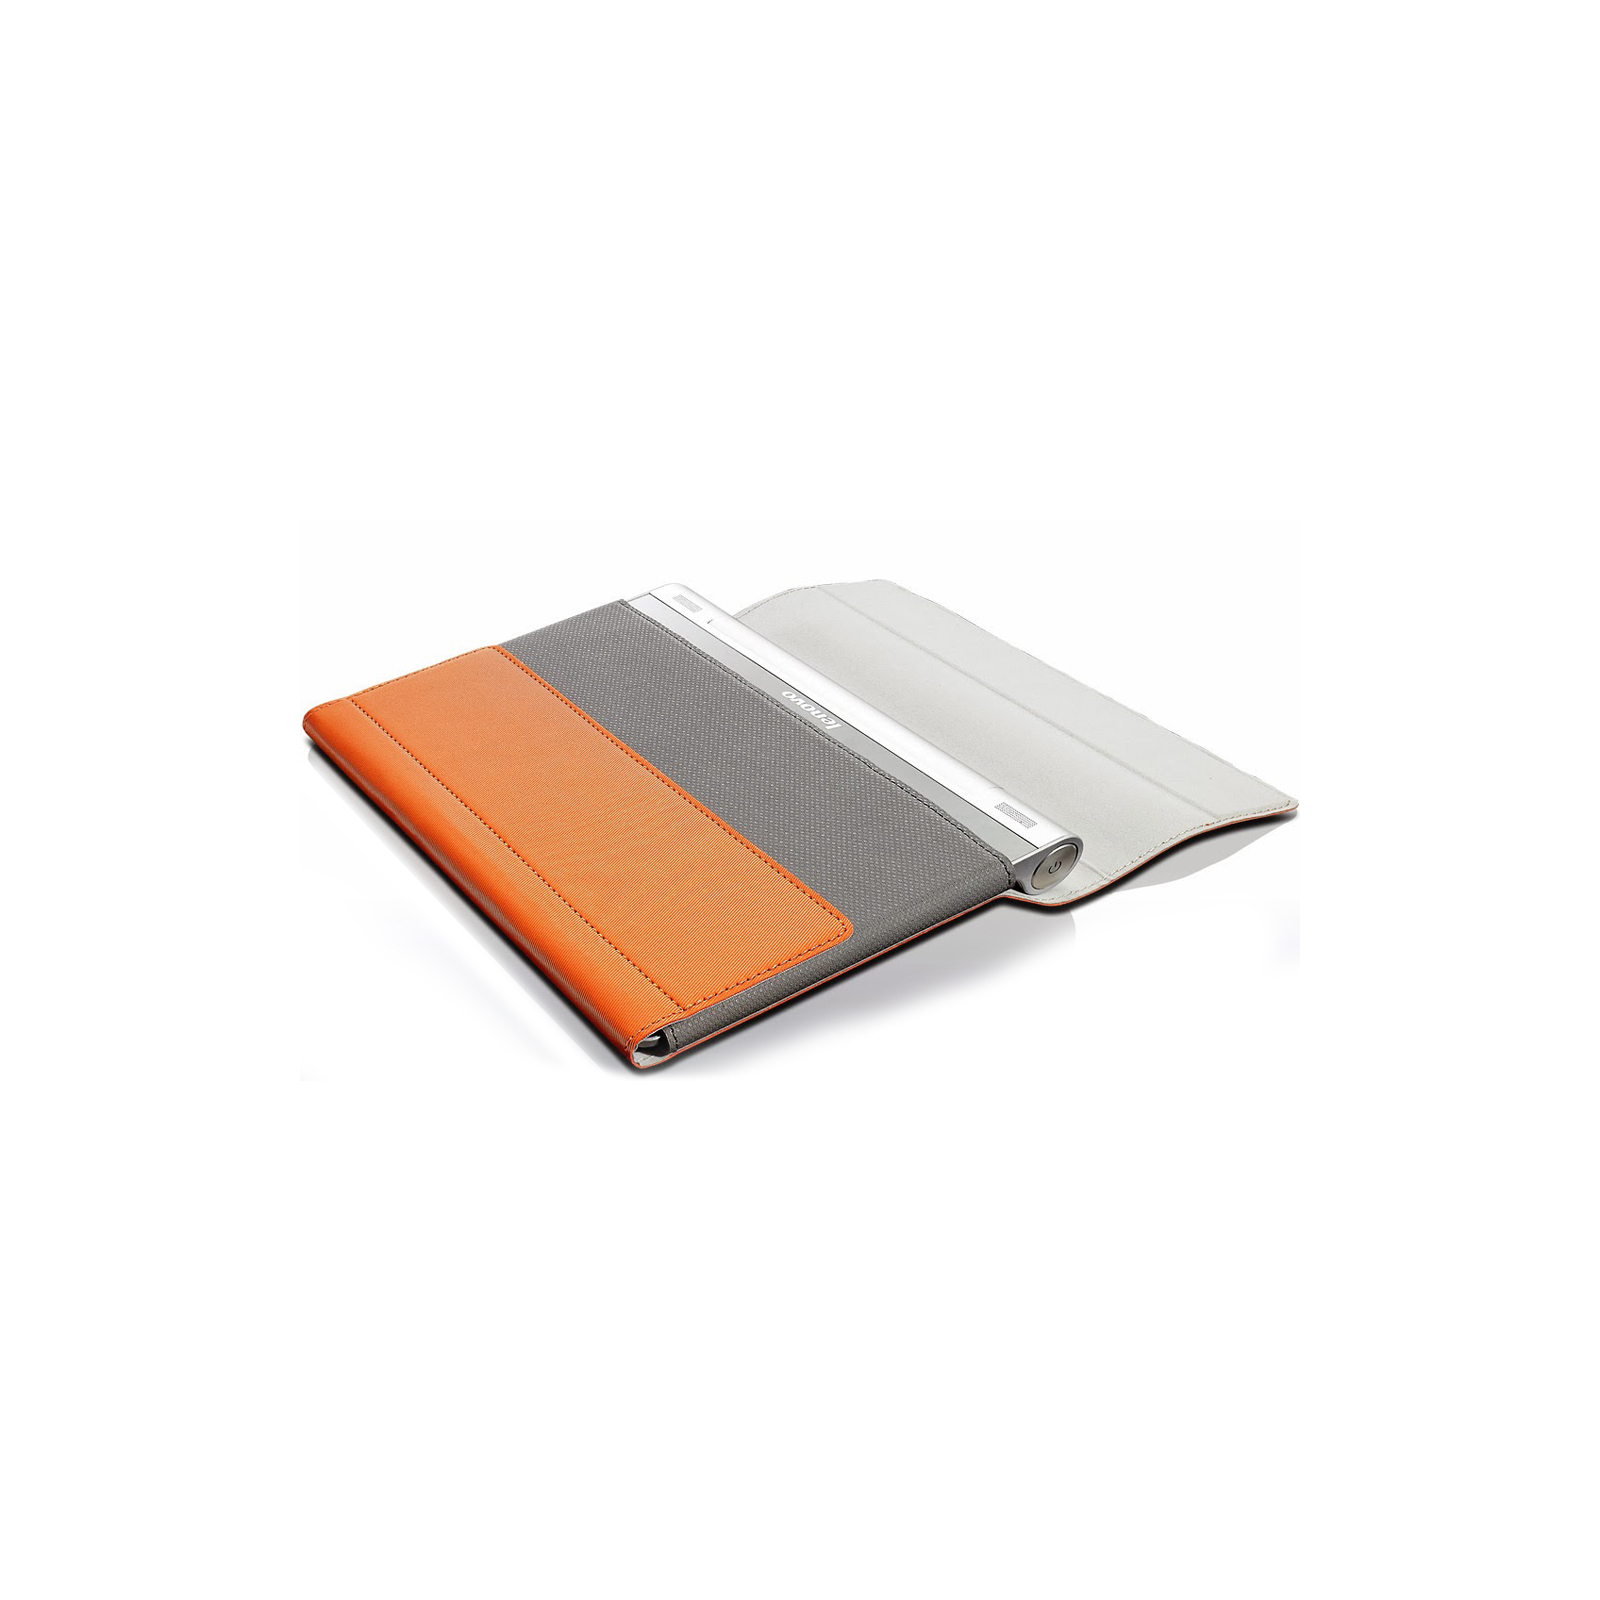 Чехол для планшета Lenovo 10' B8000 Yoga Tablet, Sleeve and Film Orange (888016005) изображение 2